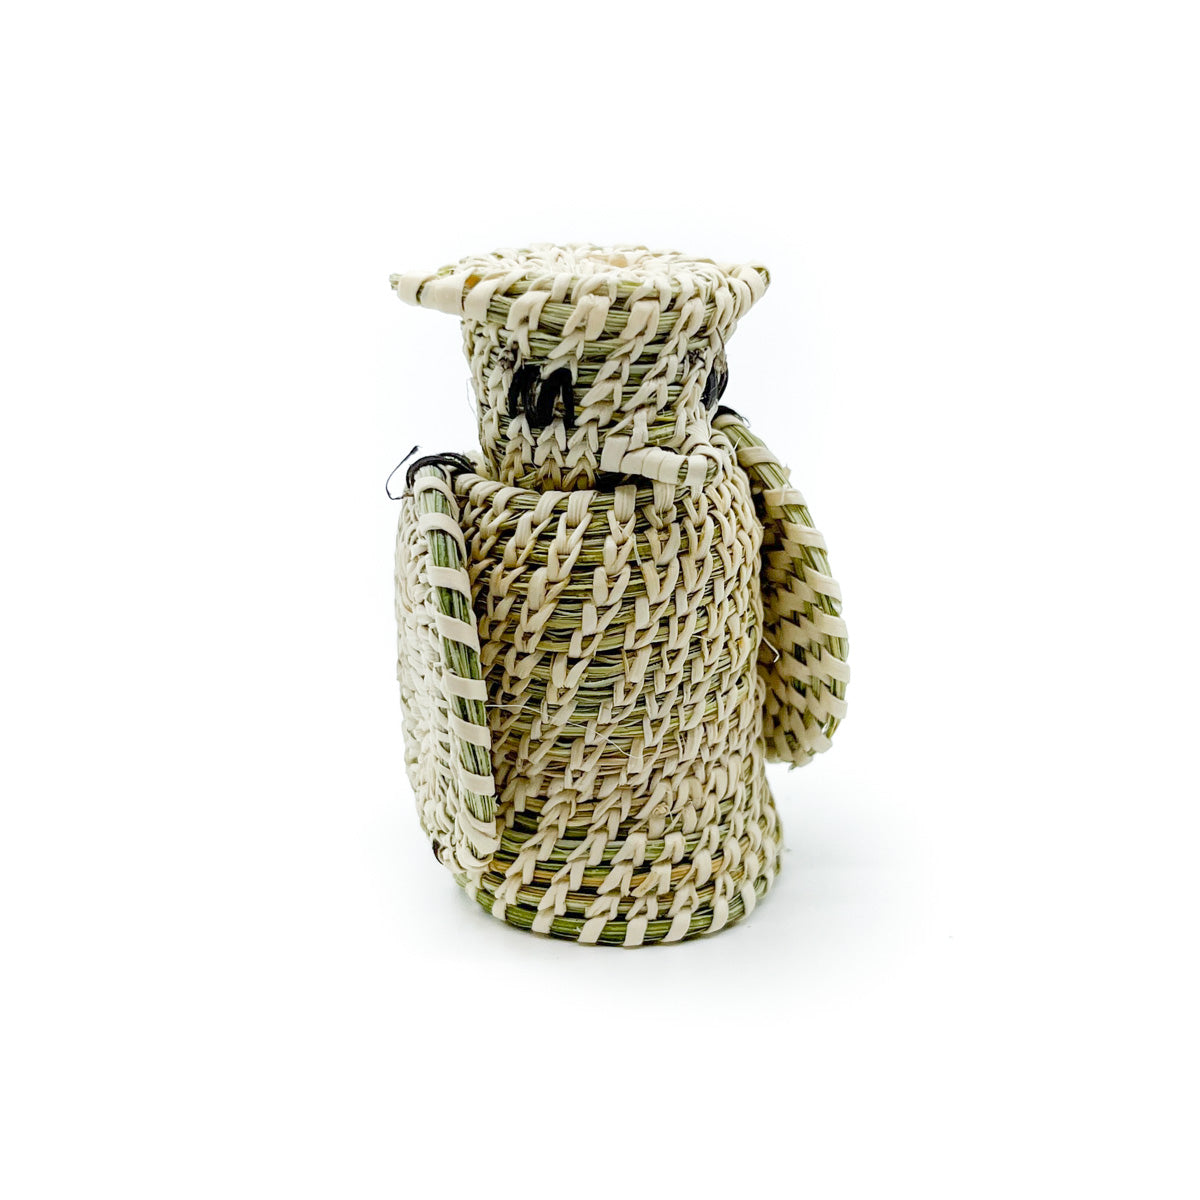 Miniature Owl Lidded Basket